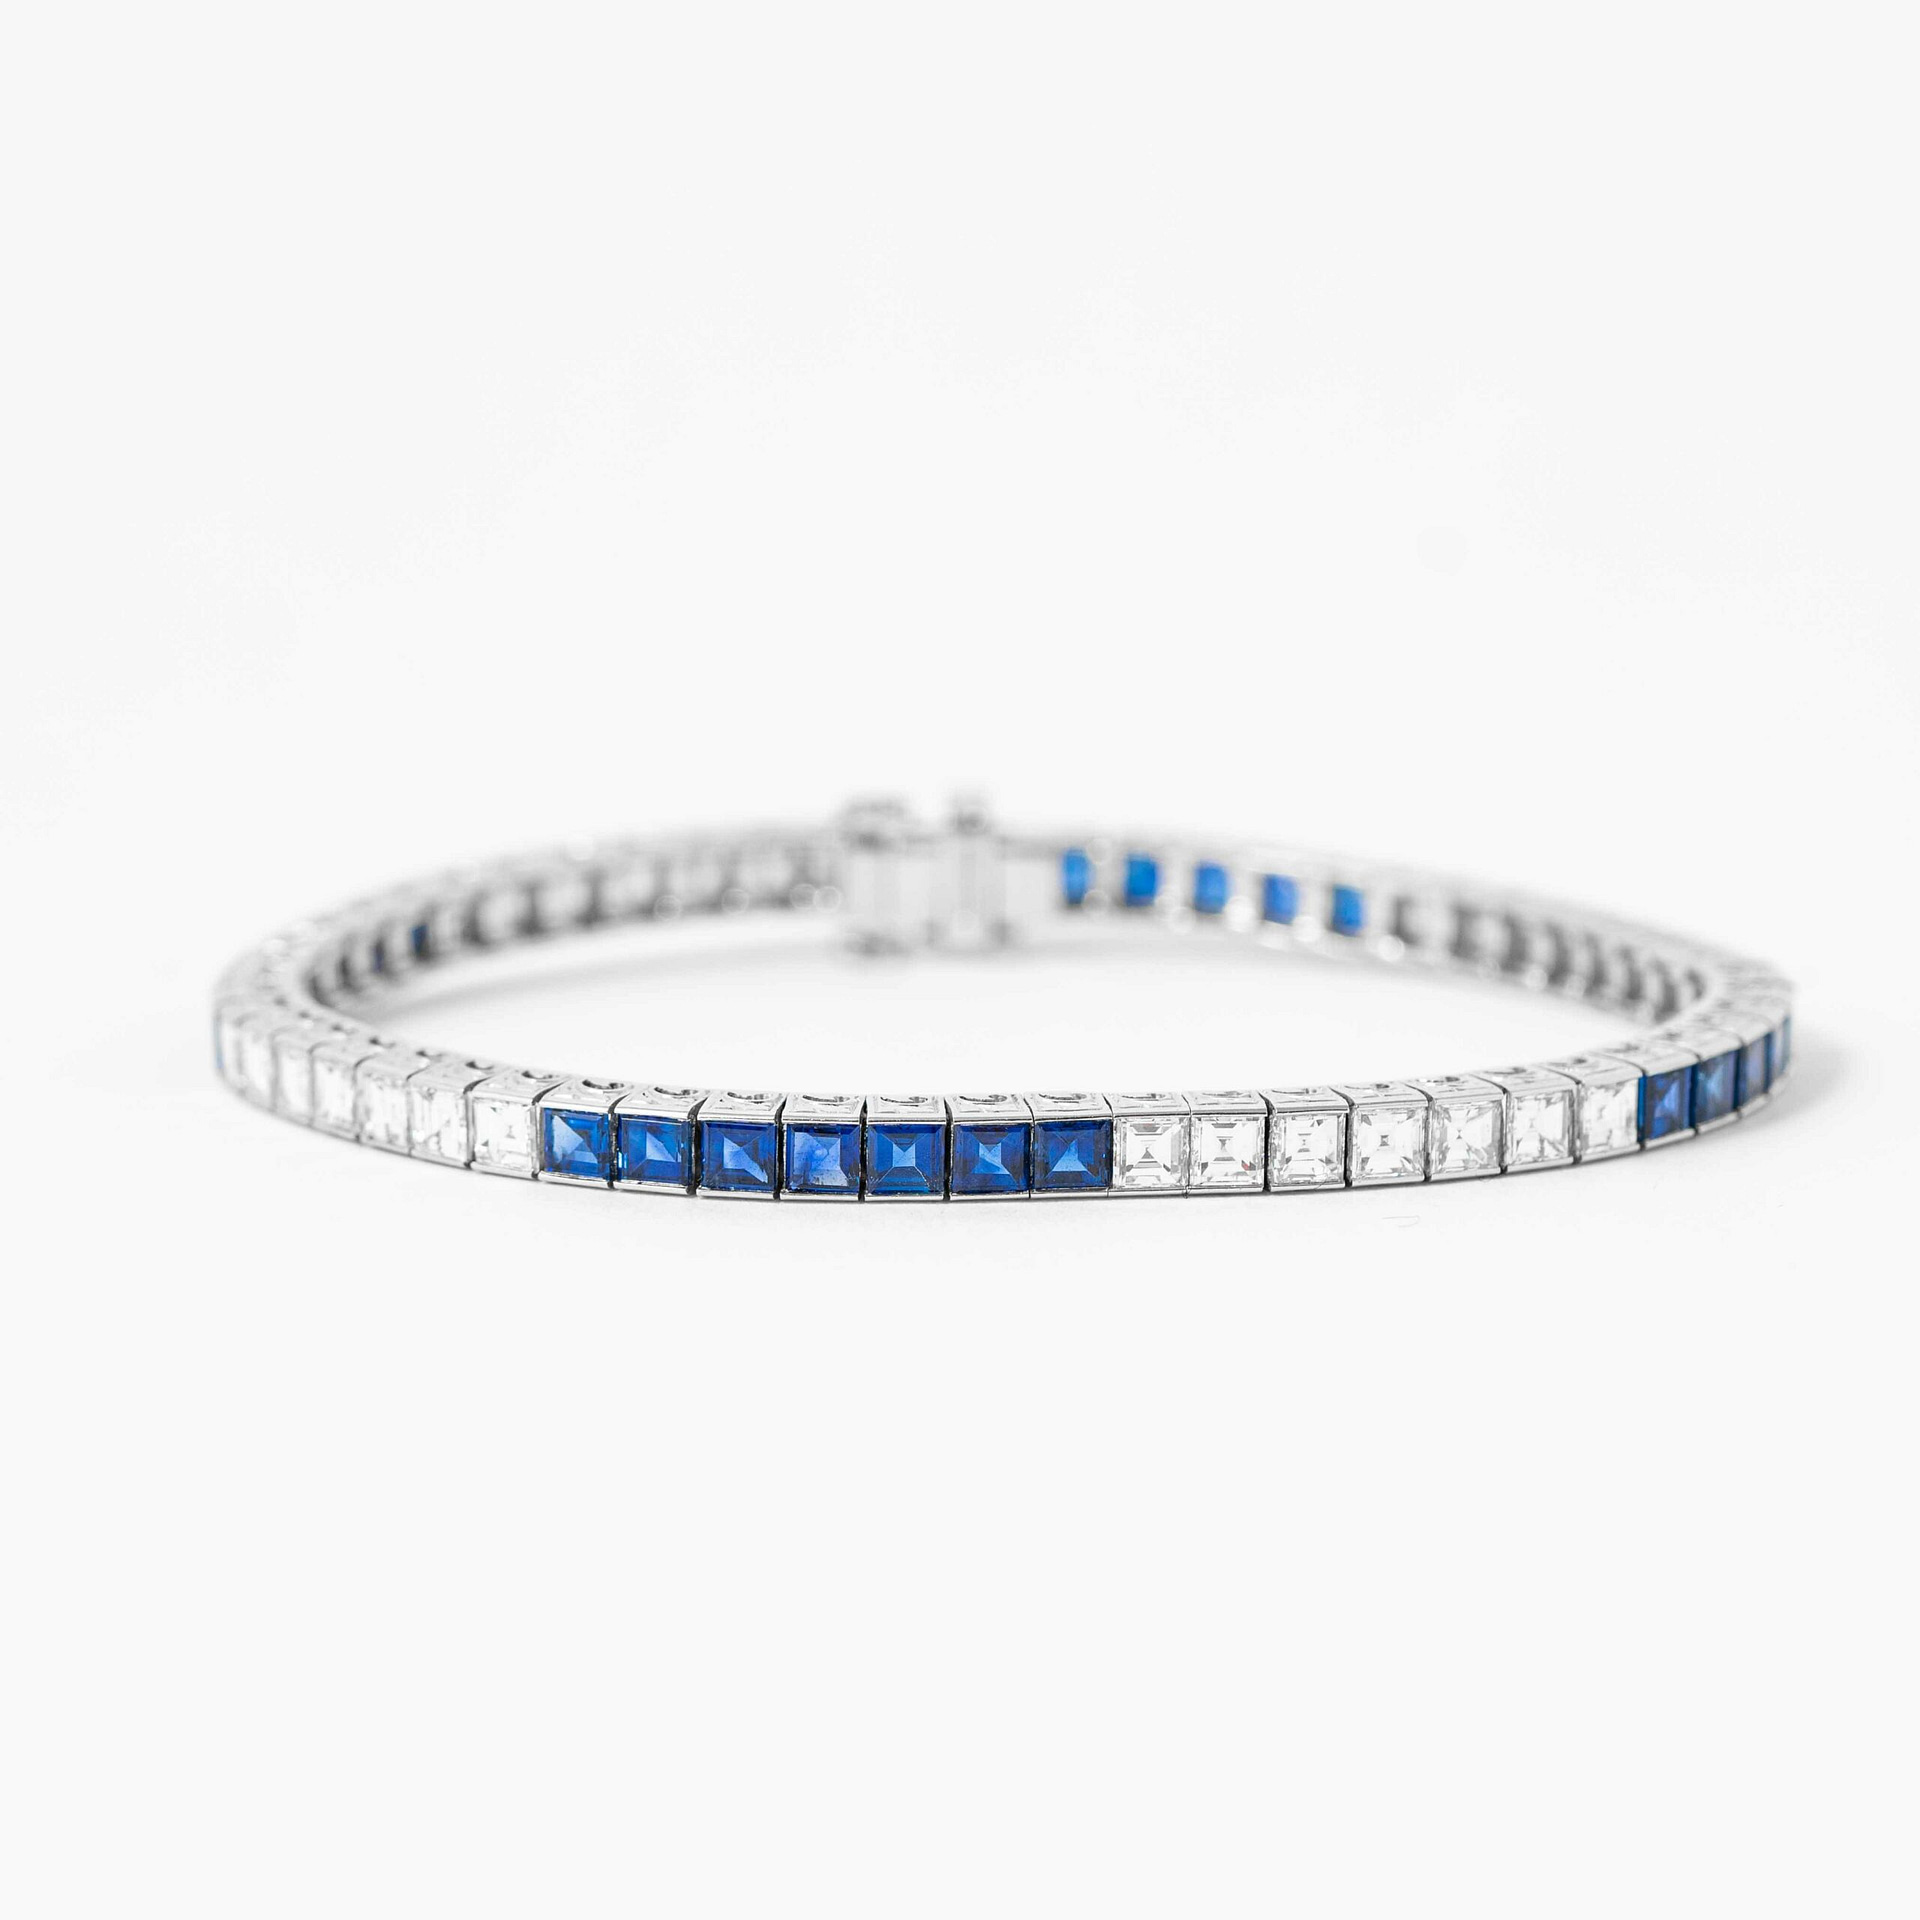 Tiffany & Co. Channel Set Diamond & Blue Sapphire Bracelet